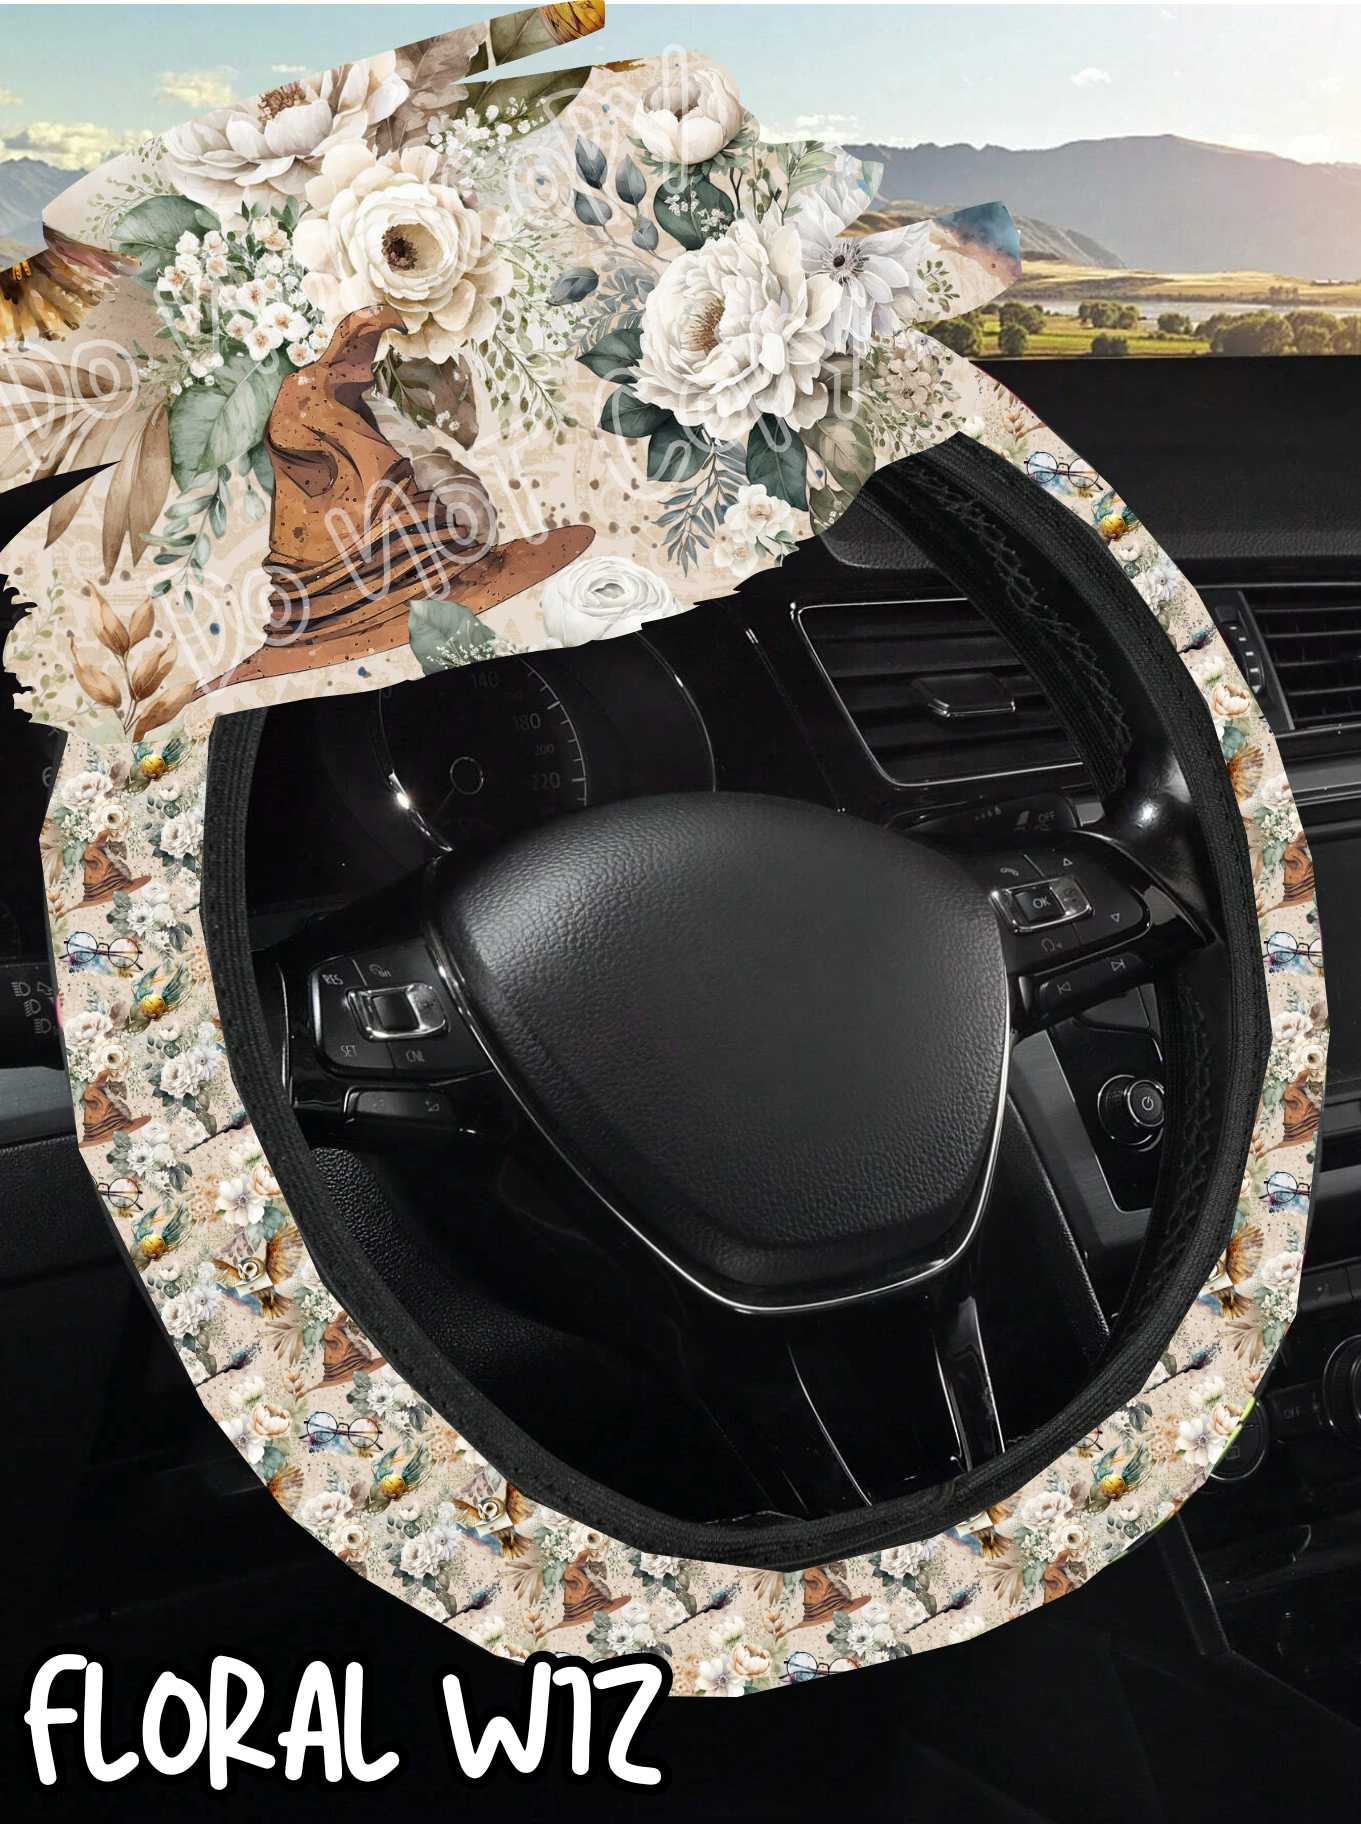 Floral Wiz - Steering Wheel Cover Preorder Round 3 Closing 10/25 ETA Early Dec